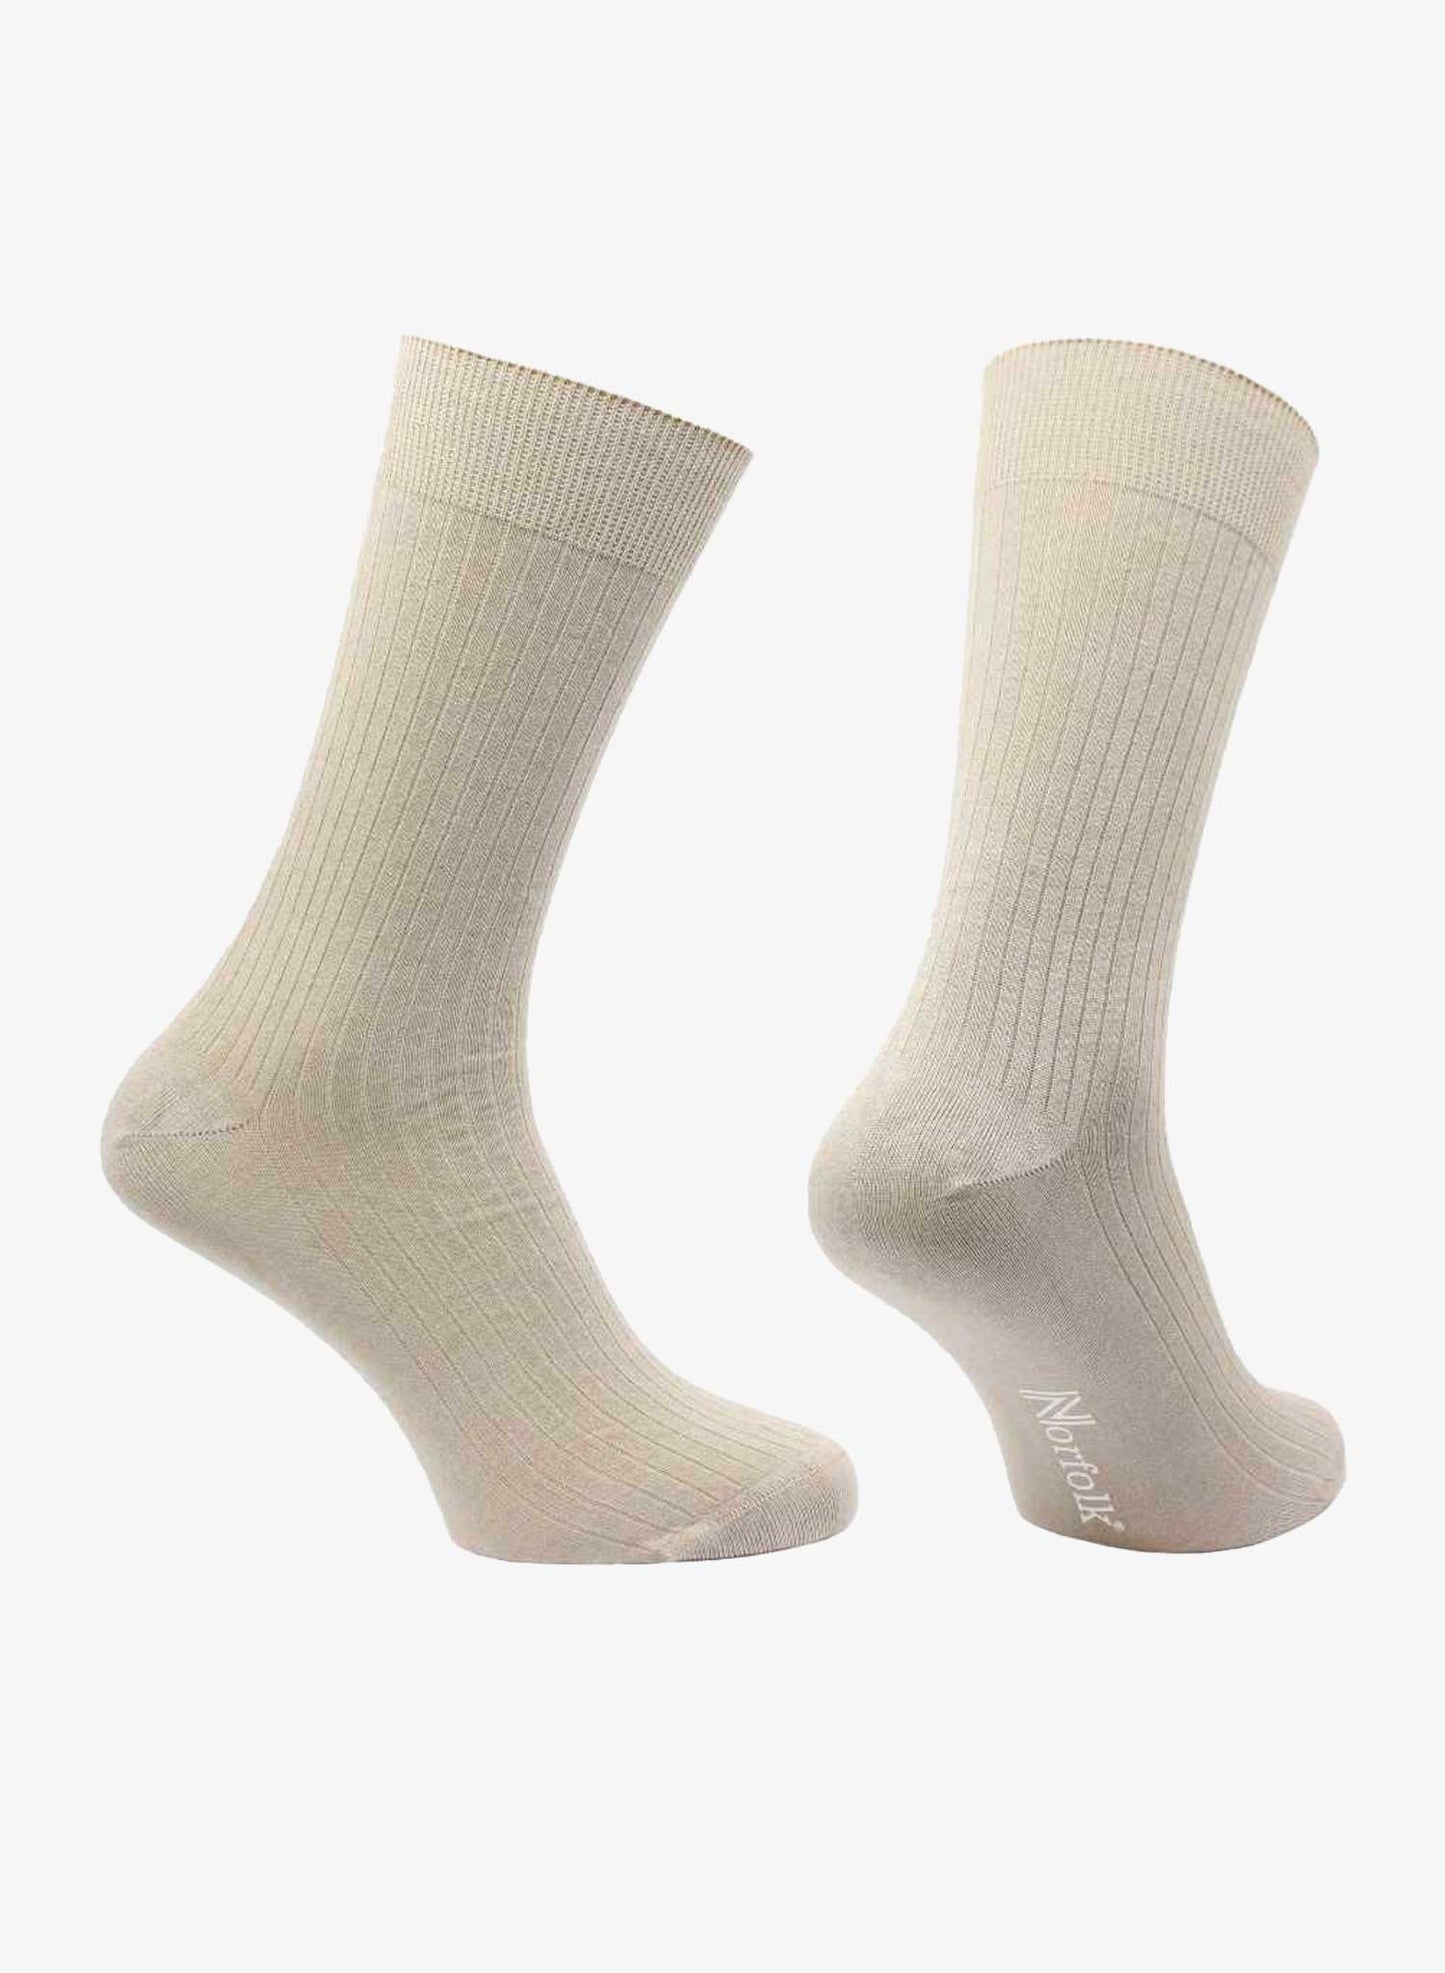 Norfolk Socks Monaco - Oatmeal